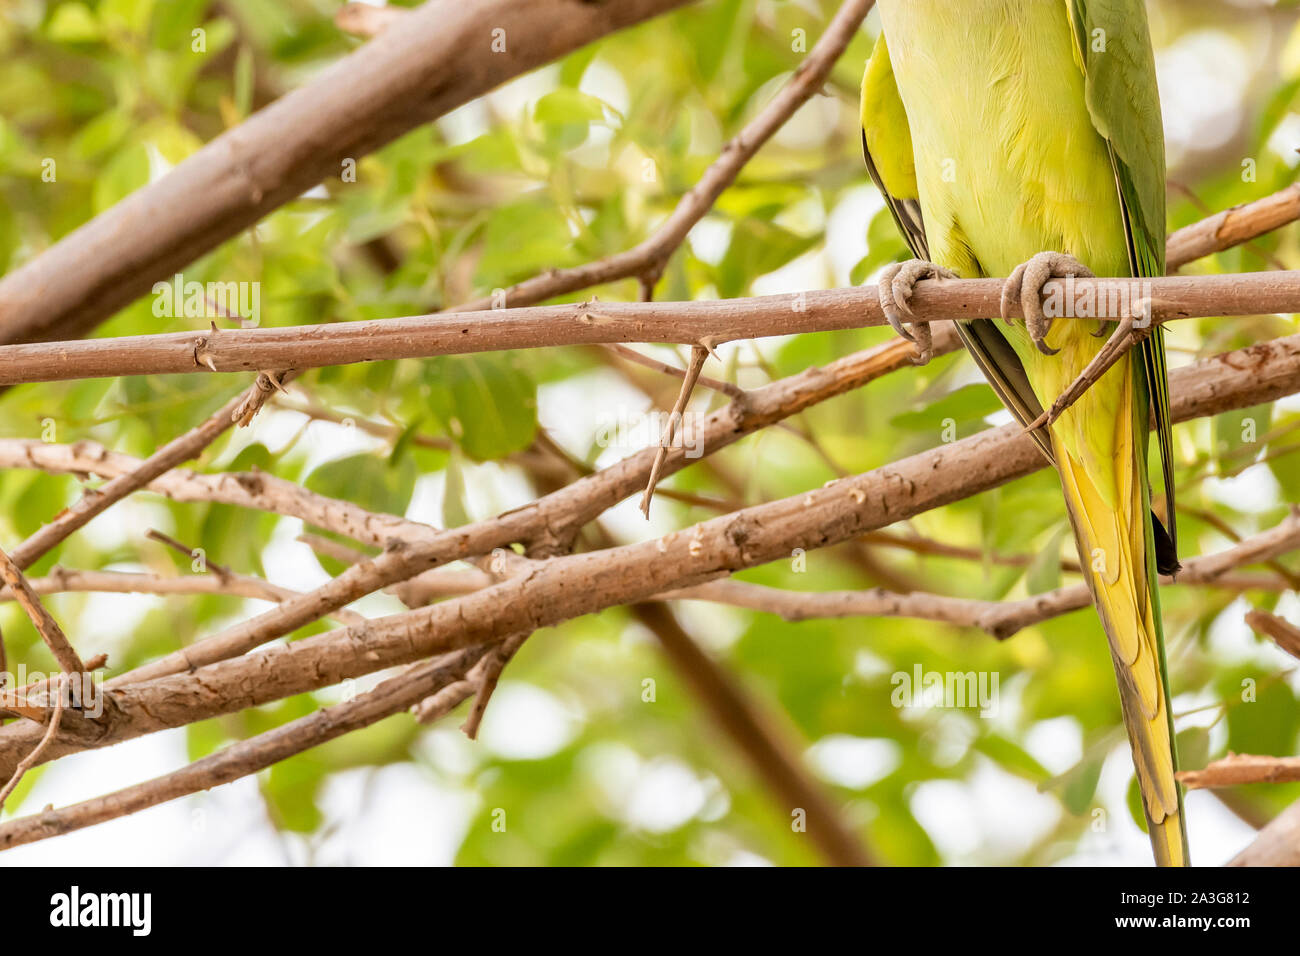 Rose-ringed Parakeet (medium size green Parrot) legs and feet Stock Photo